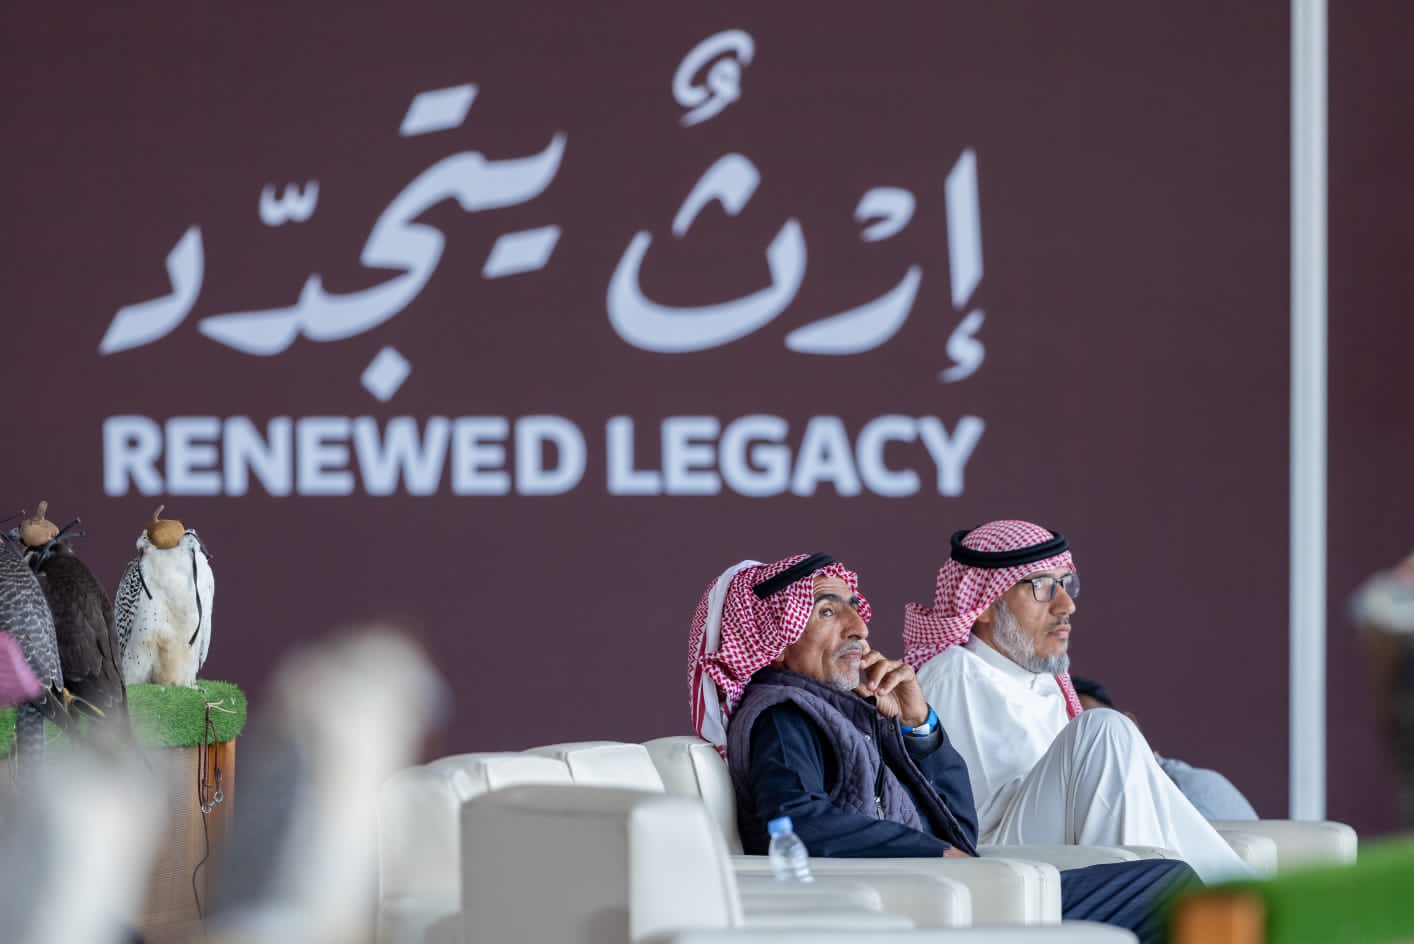 Competition ignites over $8 million at the King Abdulaziz International Falconry Festival